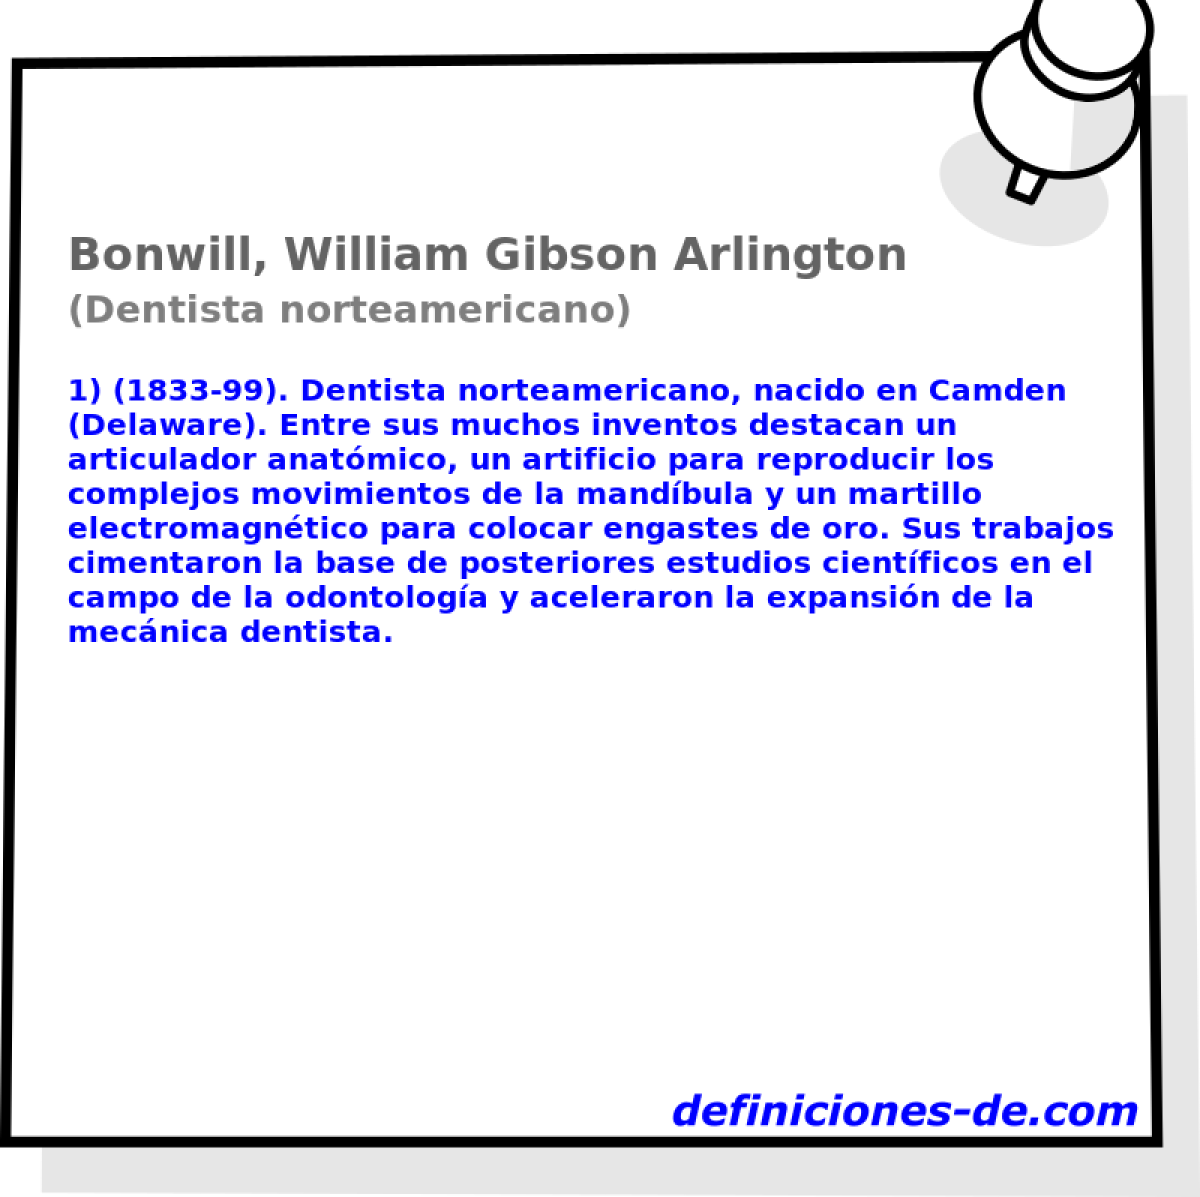 Bonwill, William Gibson Arlington (Dentista norteamericano)